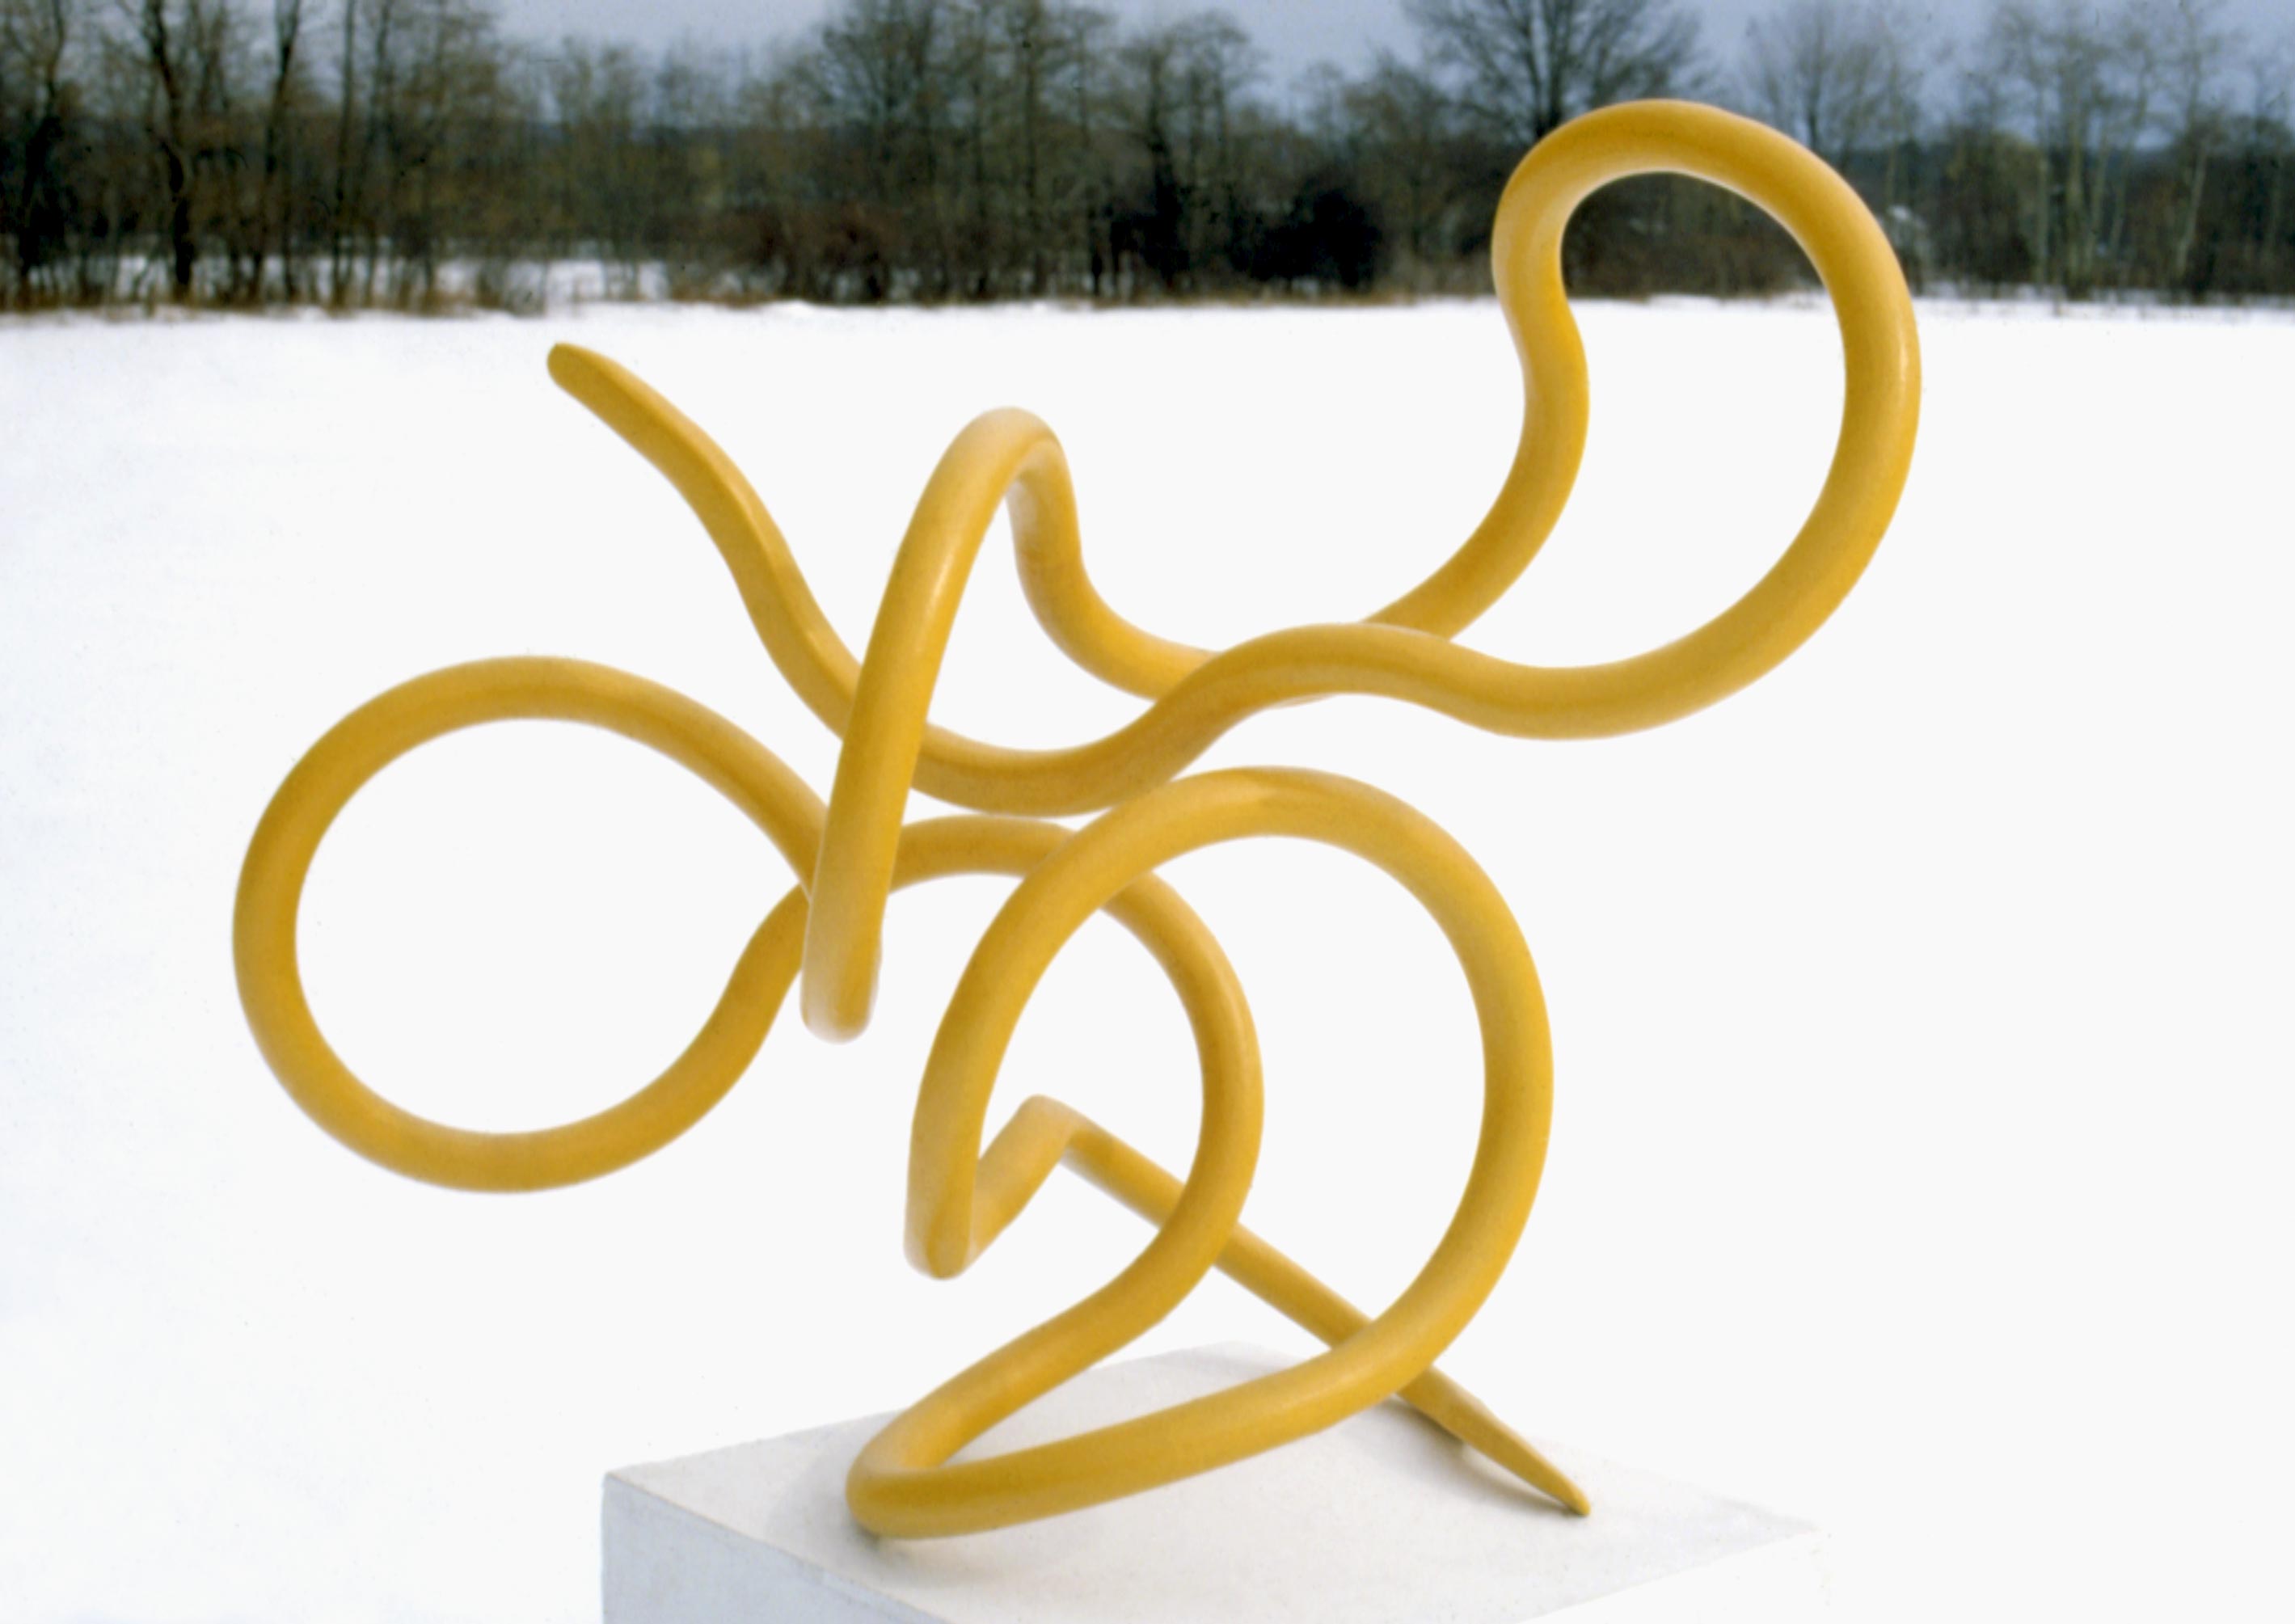 Continnum Series sculptures by Craig Shankles